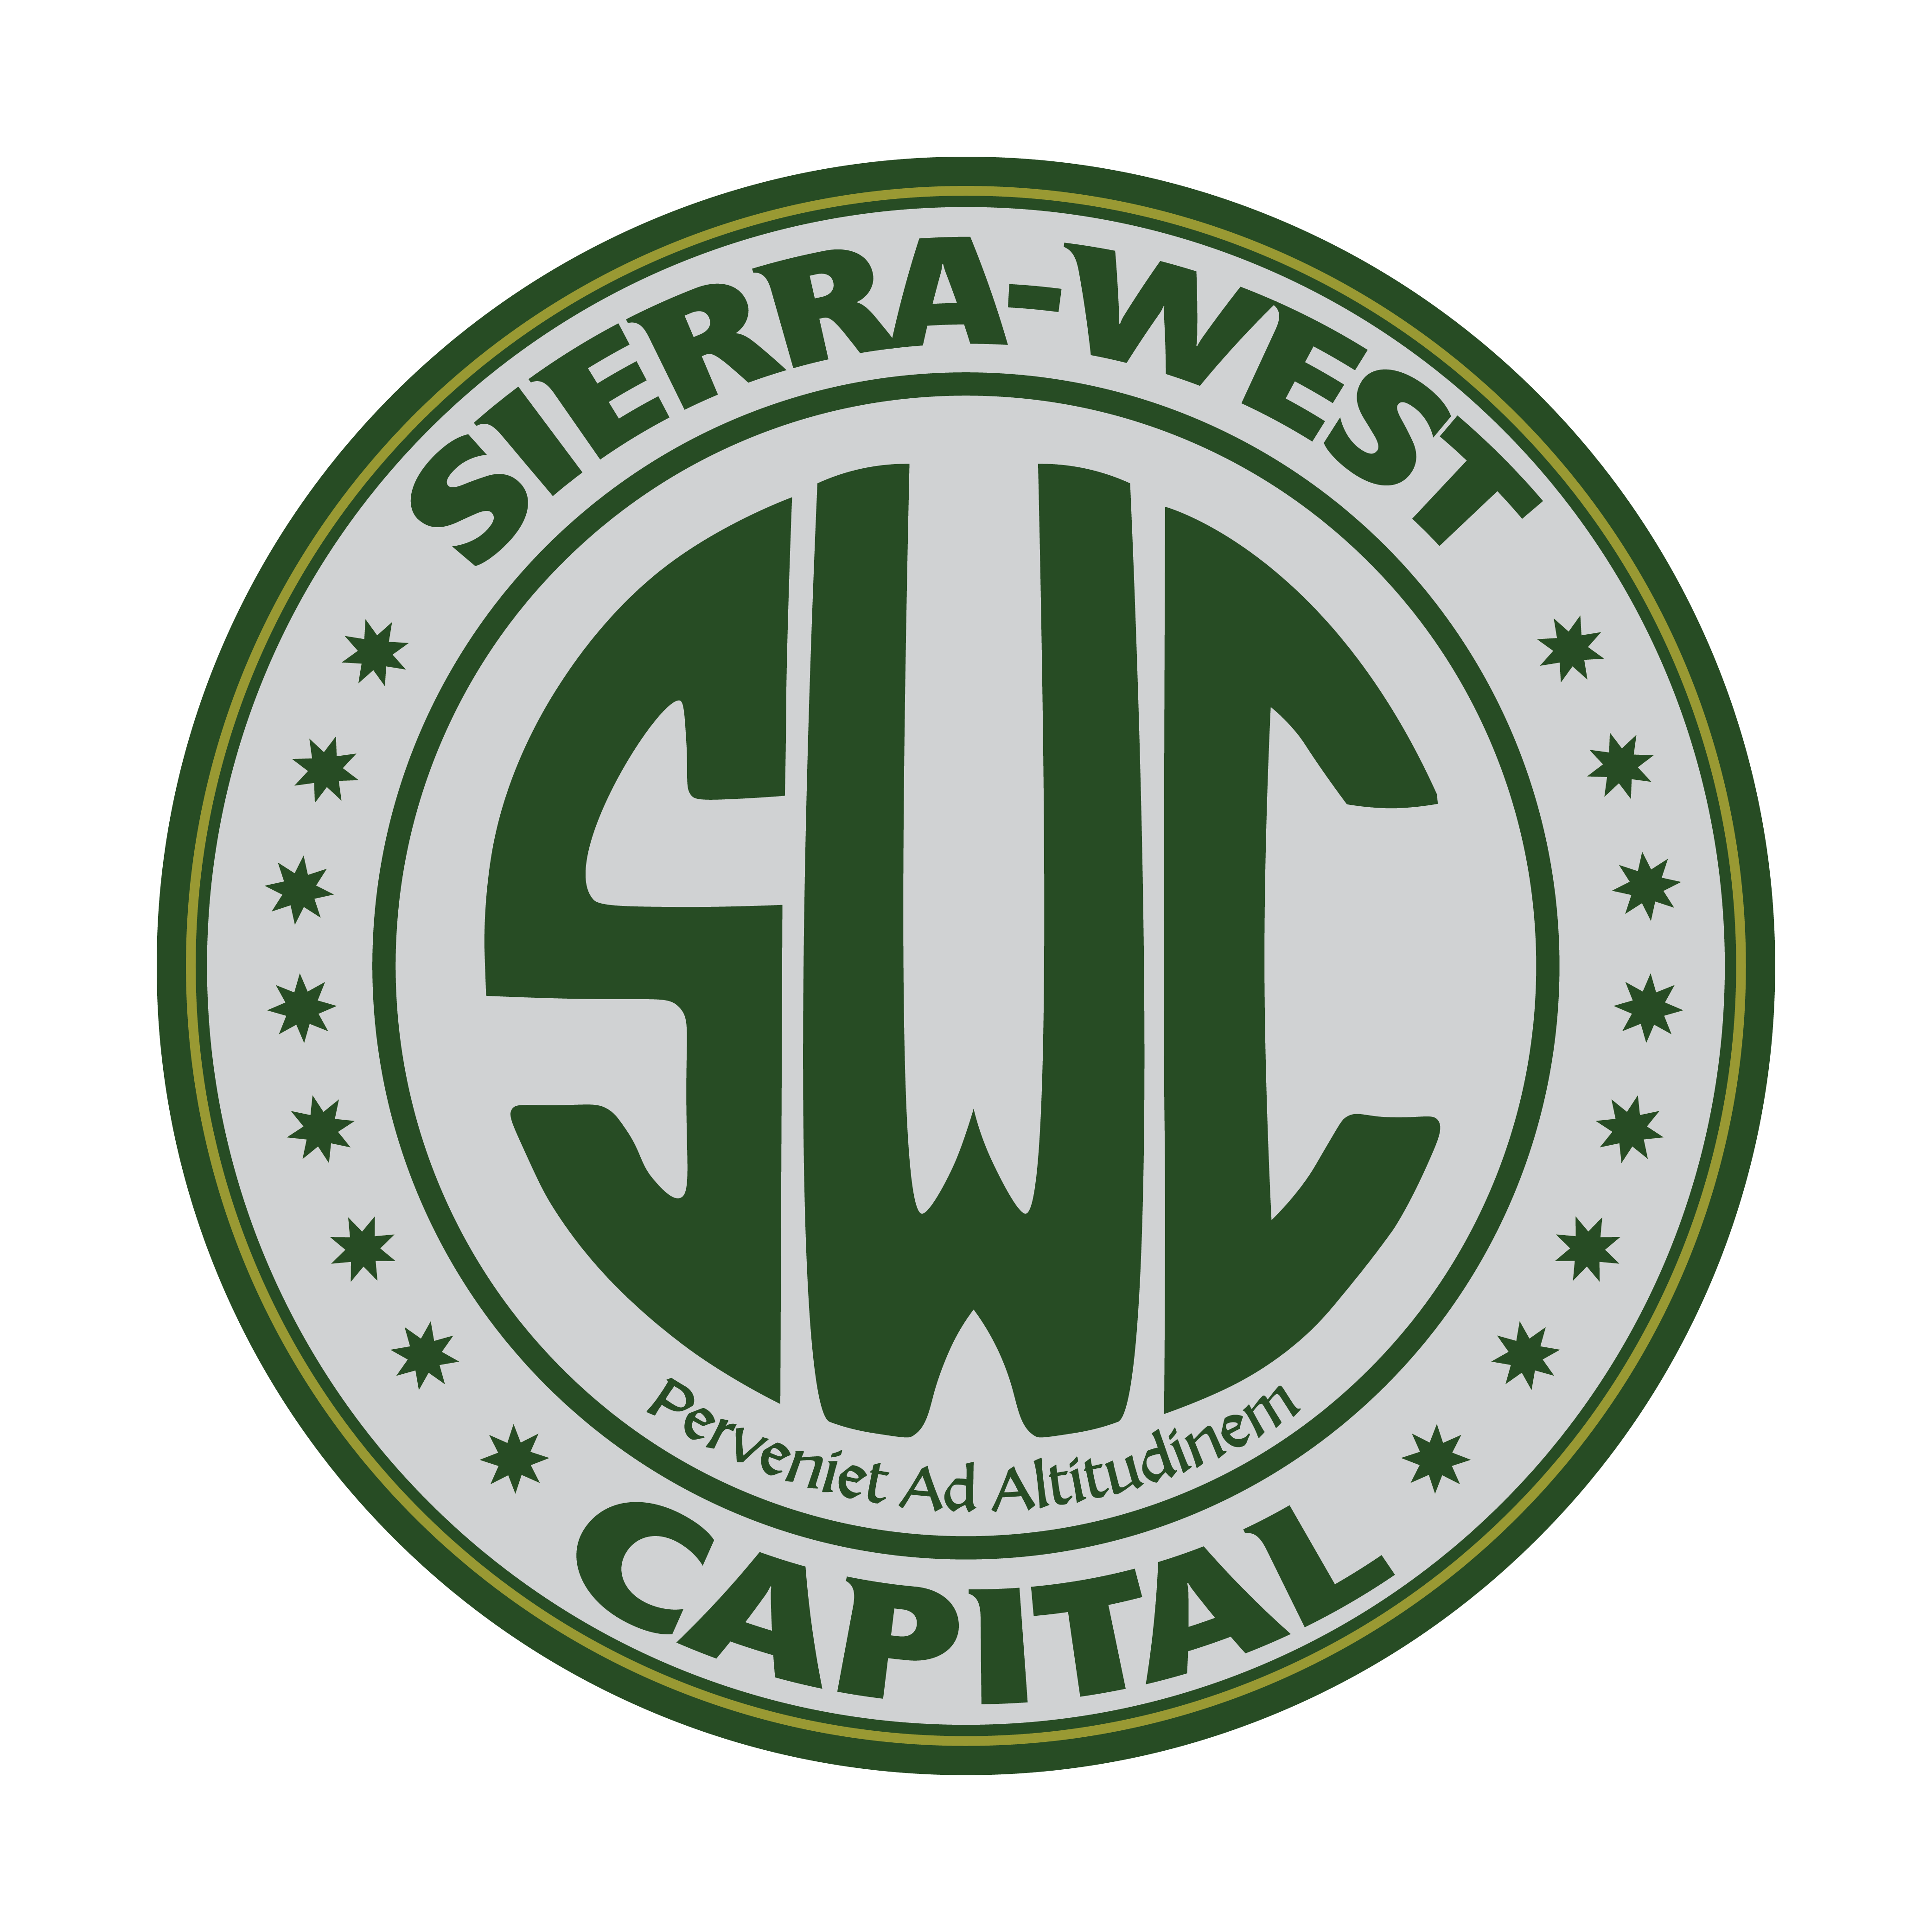 Sierra West Capital